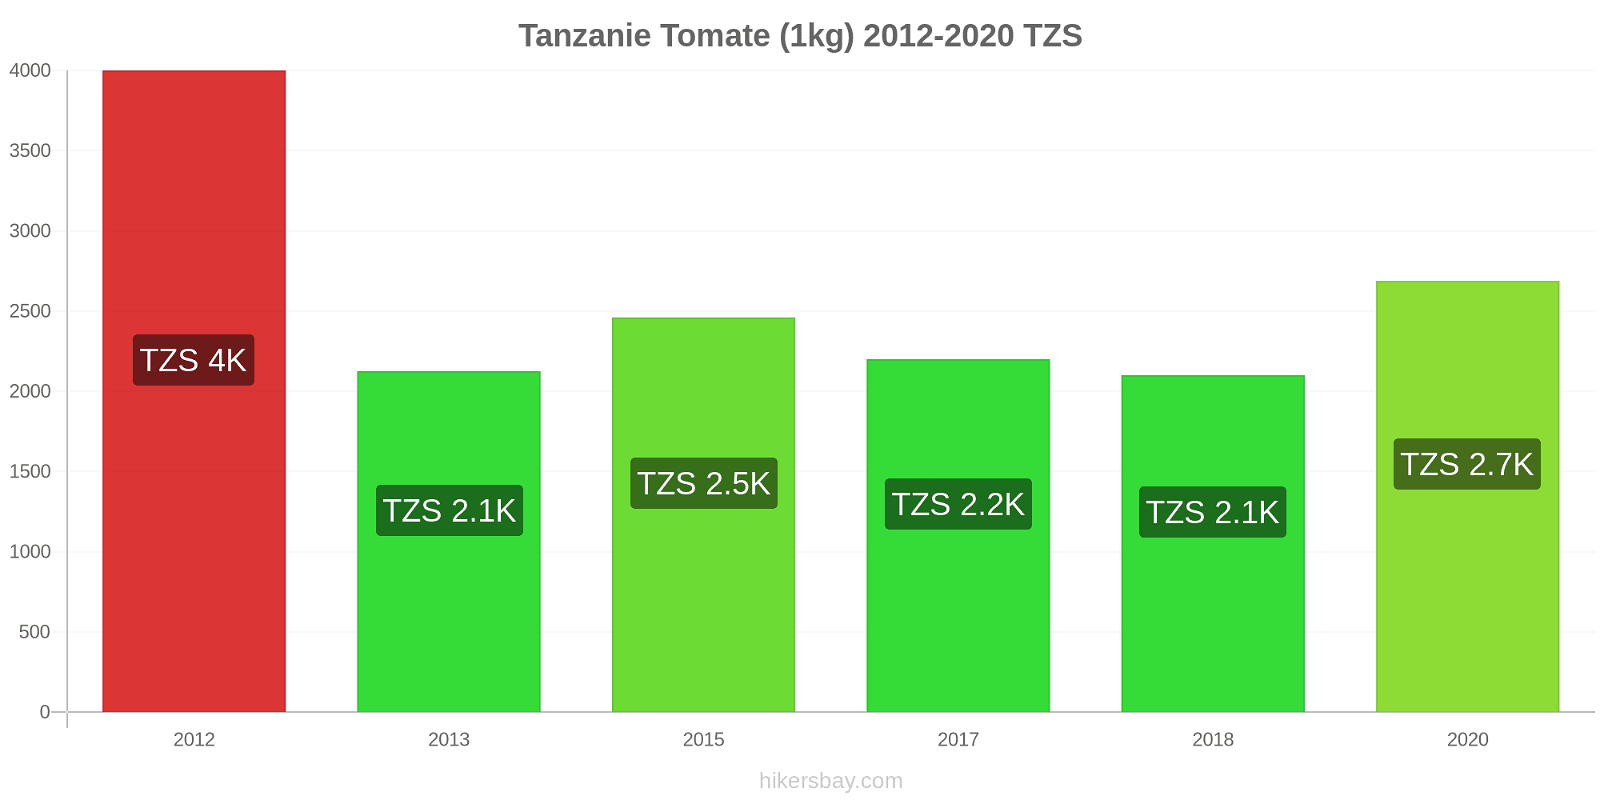 Tanzanie changements de prix Tomate (1kg) hikersbay.com